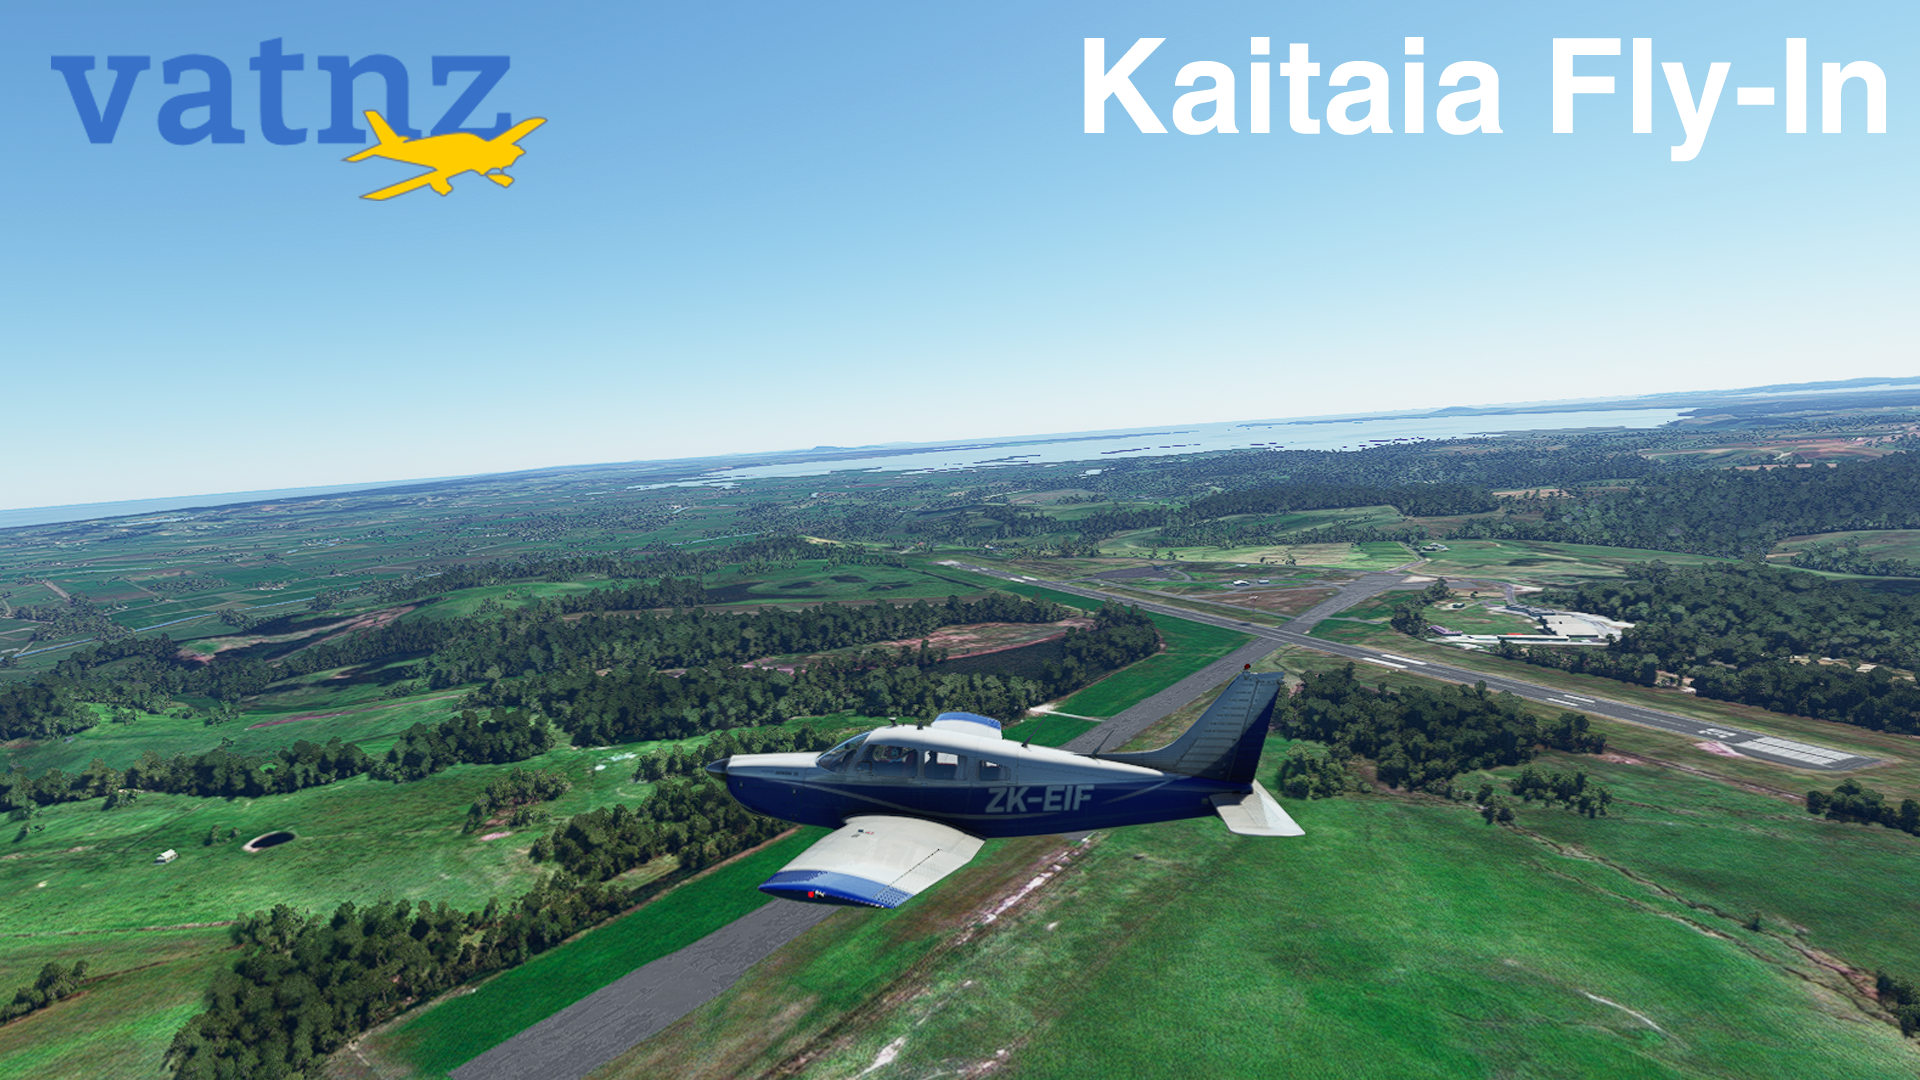 Kaitaia Fly-in